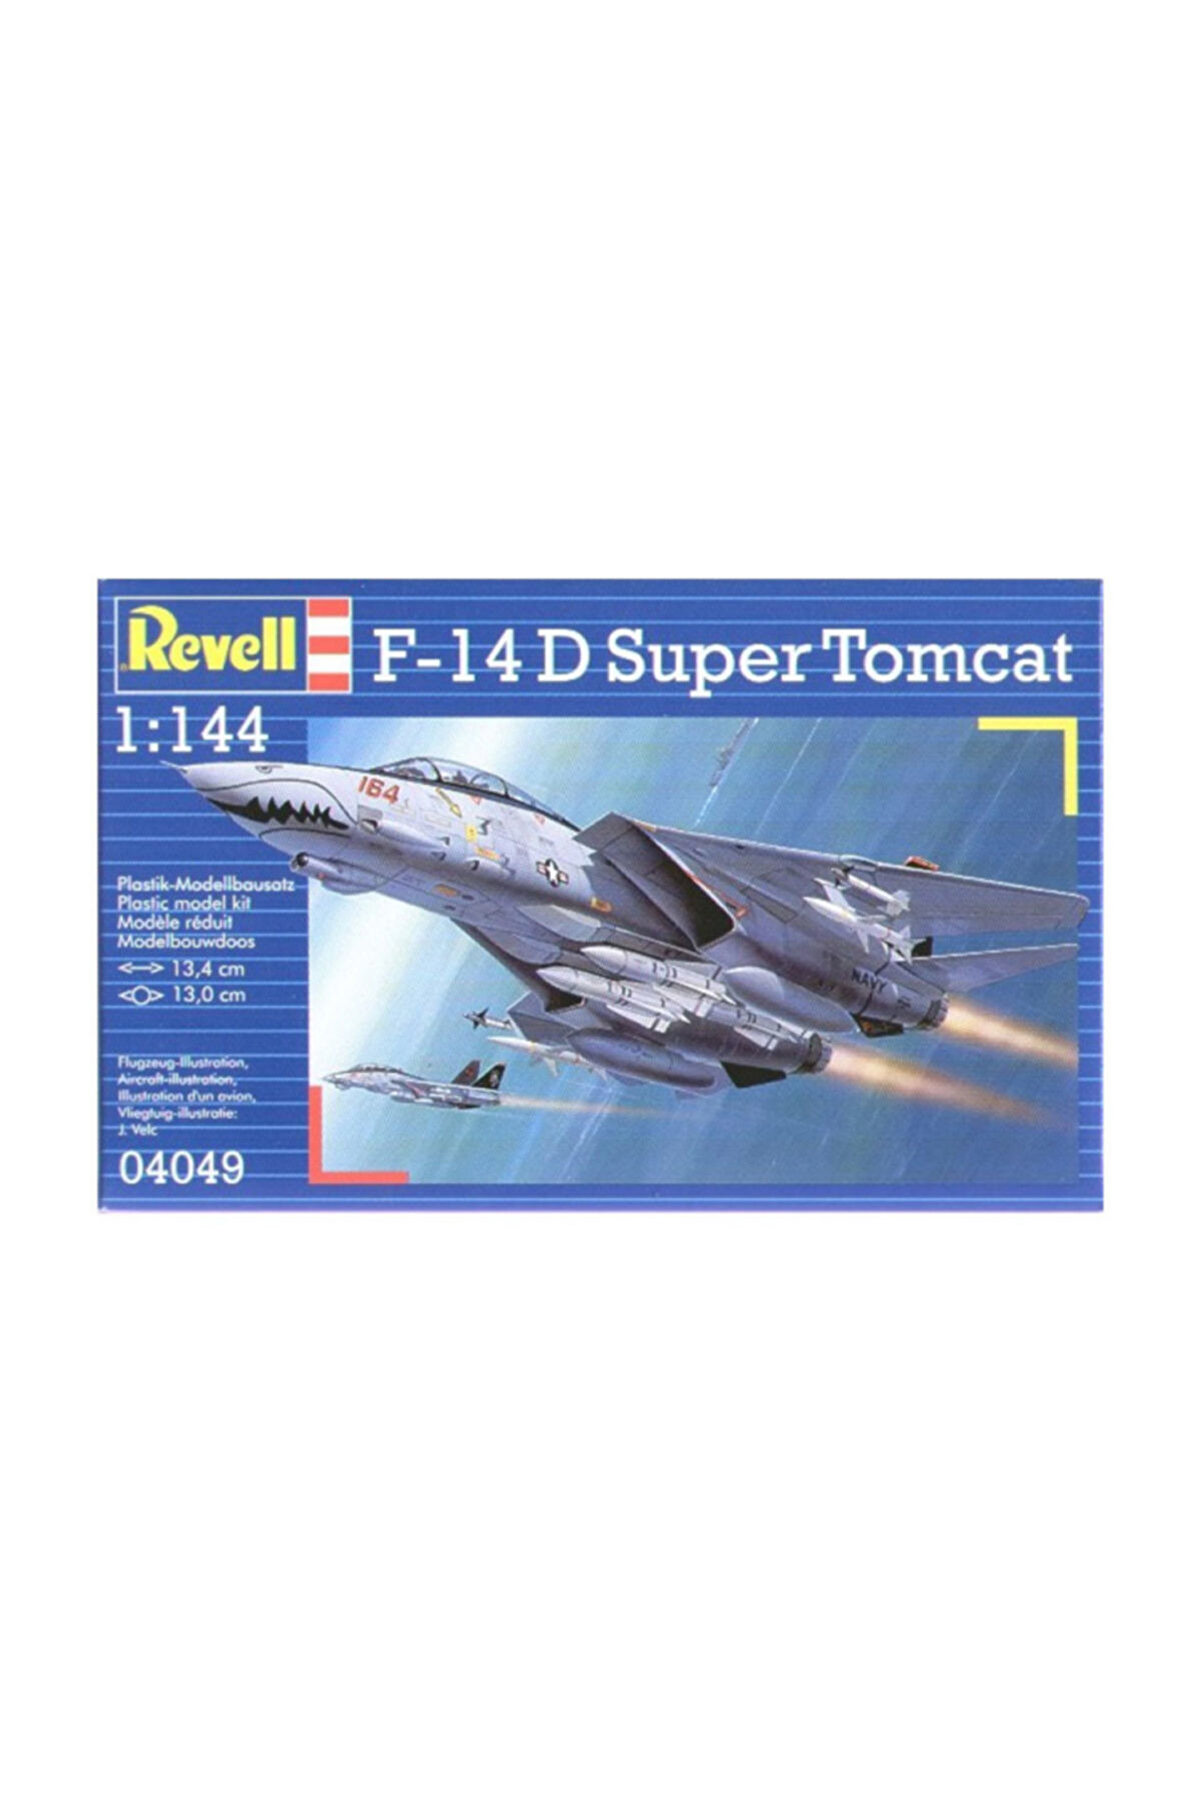 REVELL F-14D Super Tomcat-4049